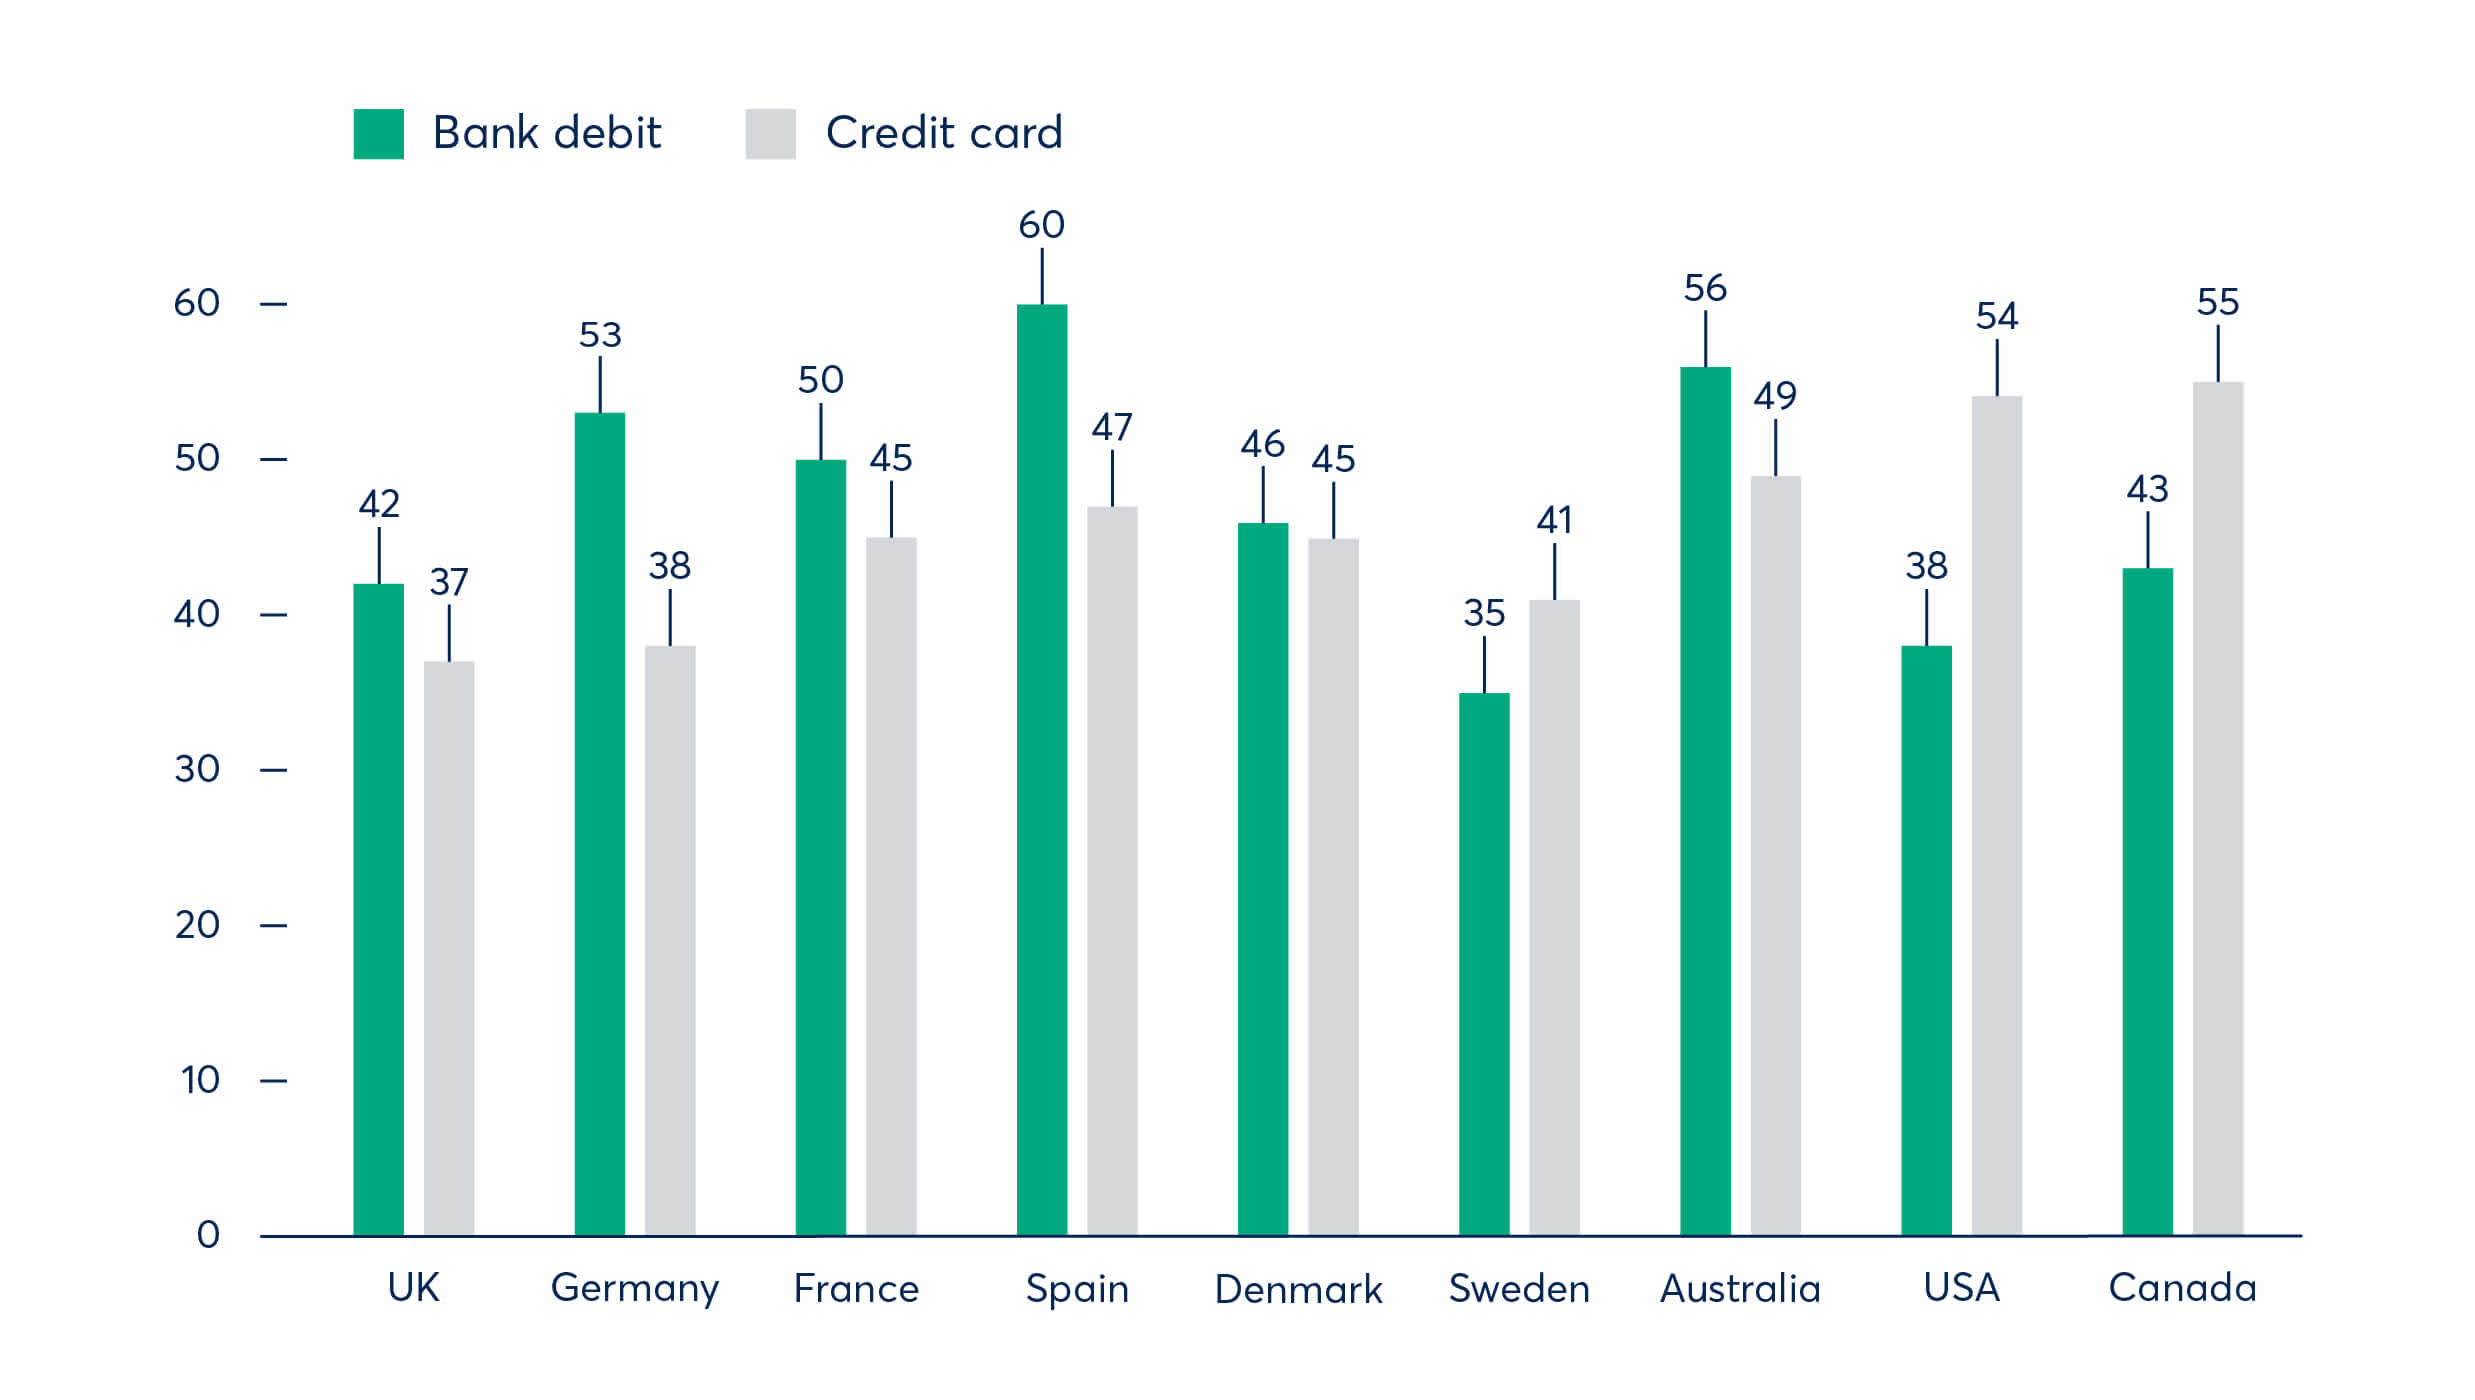 B2B SaaS bank debit vs credit card